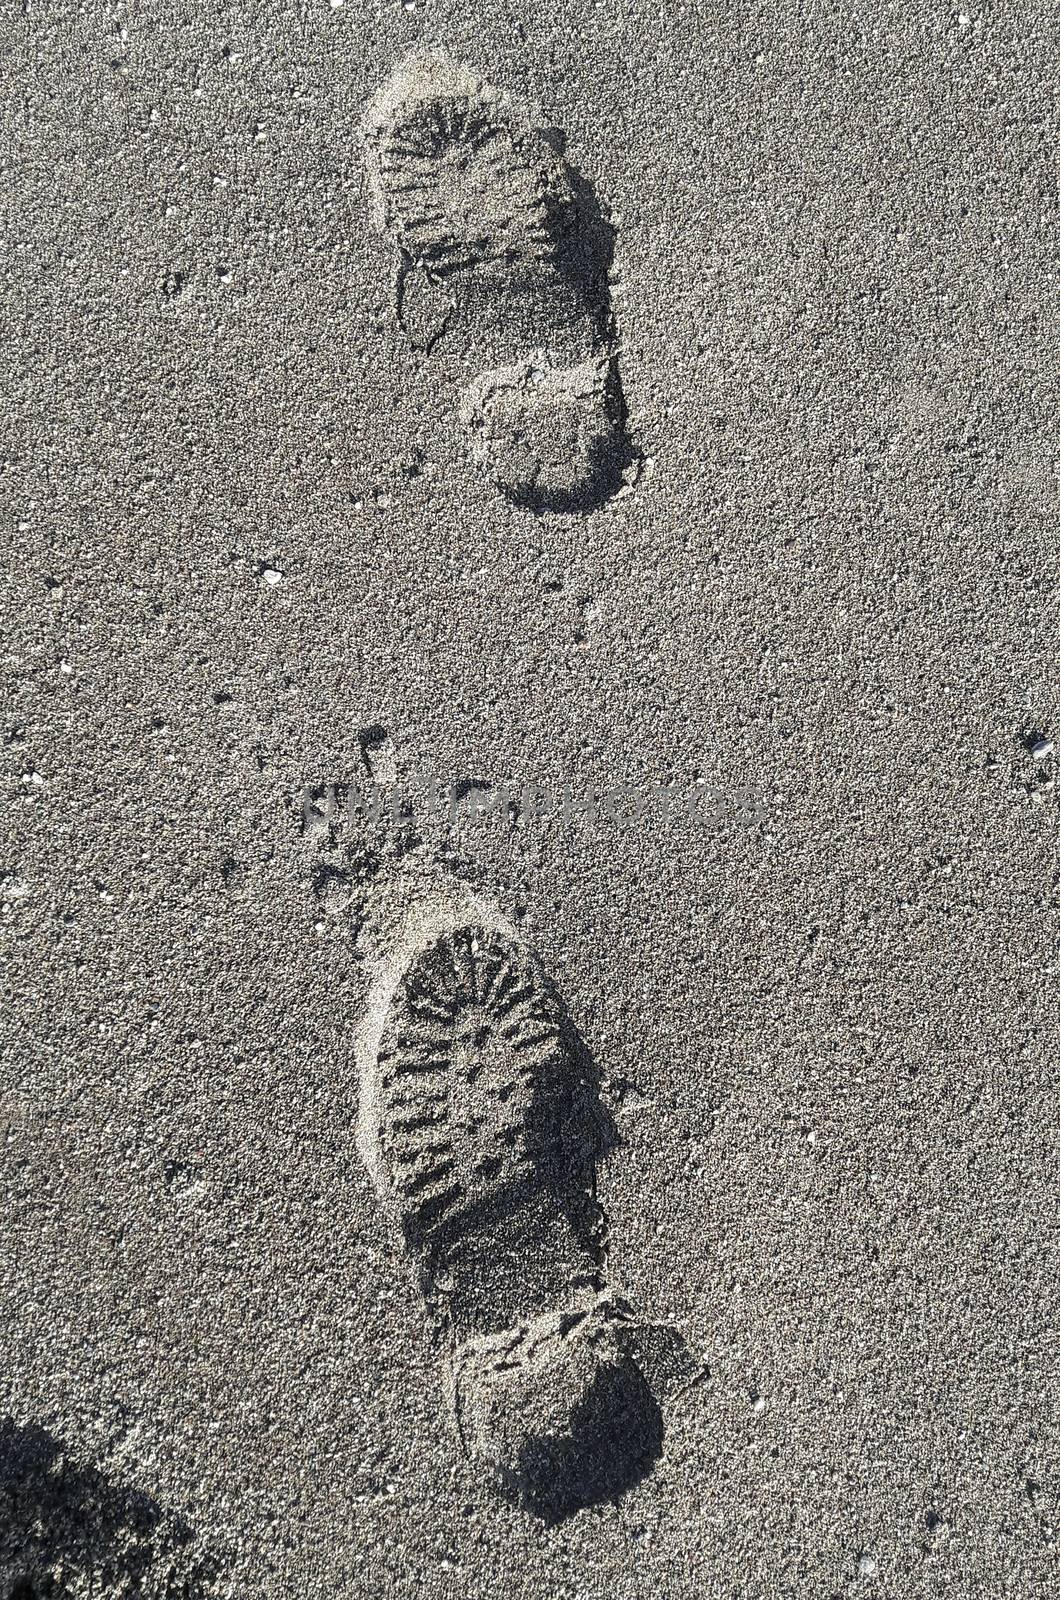 Footprints of shoes on a sandy beach by marcorubino